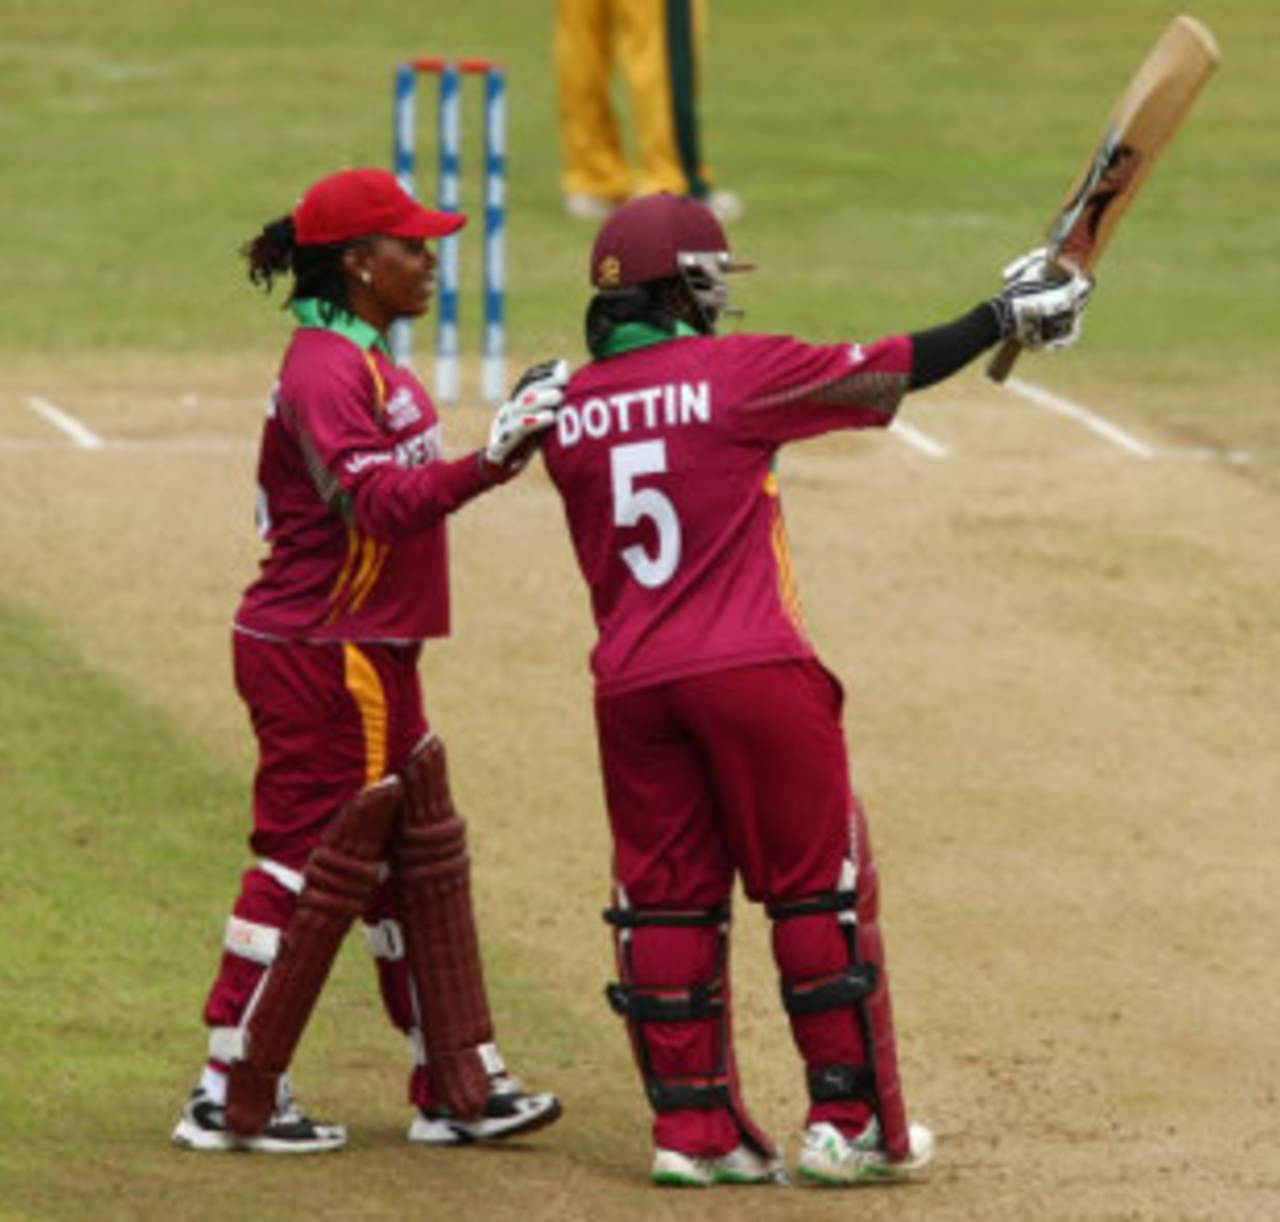 Deandra Dottin's half-century - the fastest in Women's Twenty20 internationals - was in vain as Australia beat West Indies by eight wickets in Taunton&nbsp;&nbsp;&bull;&nbsp;&nbsp;Getty Images